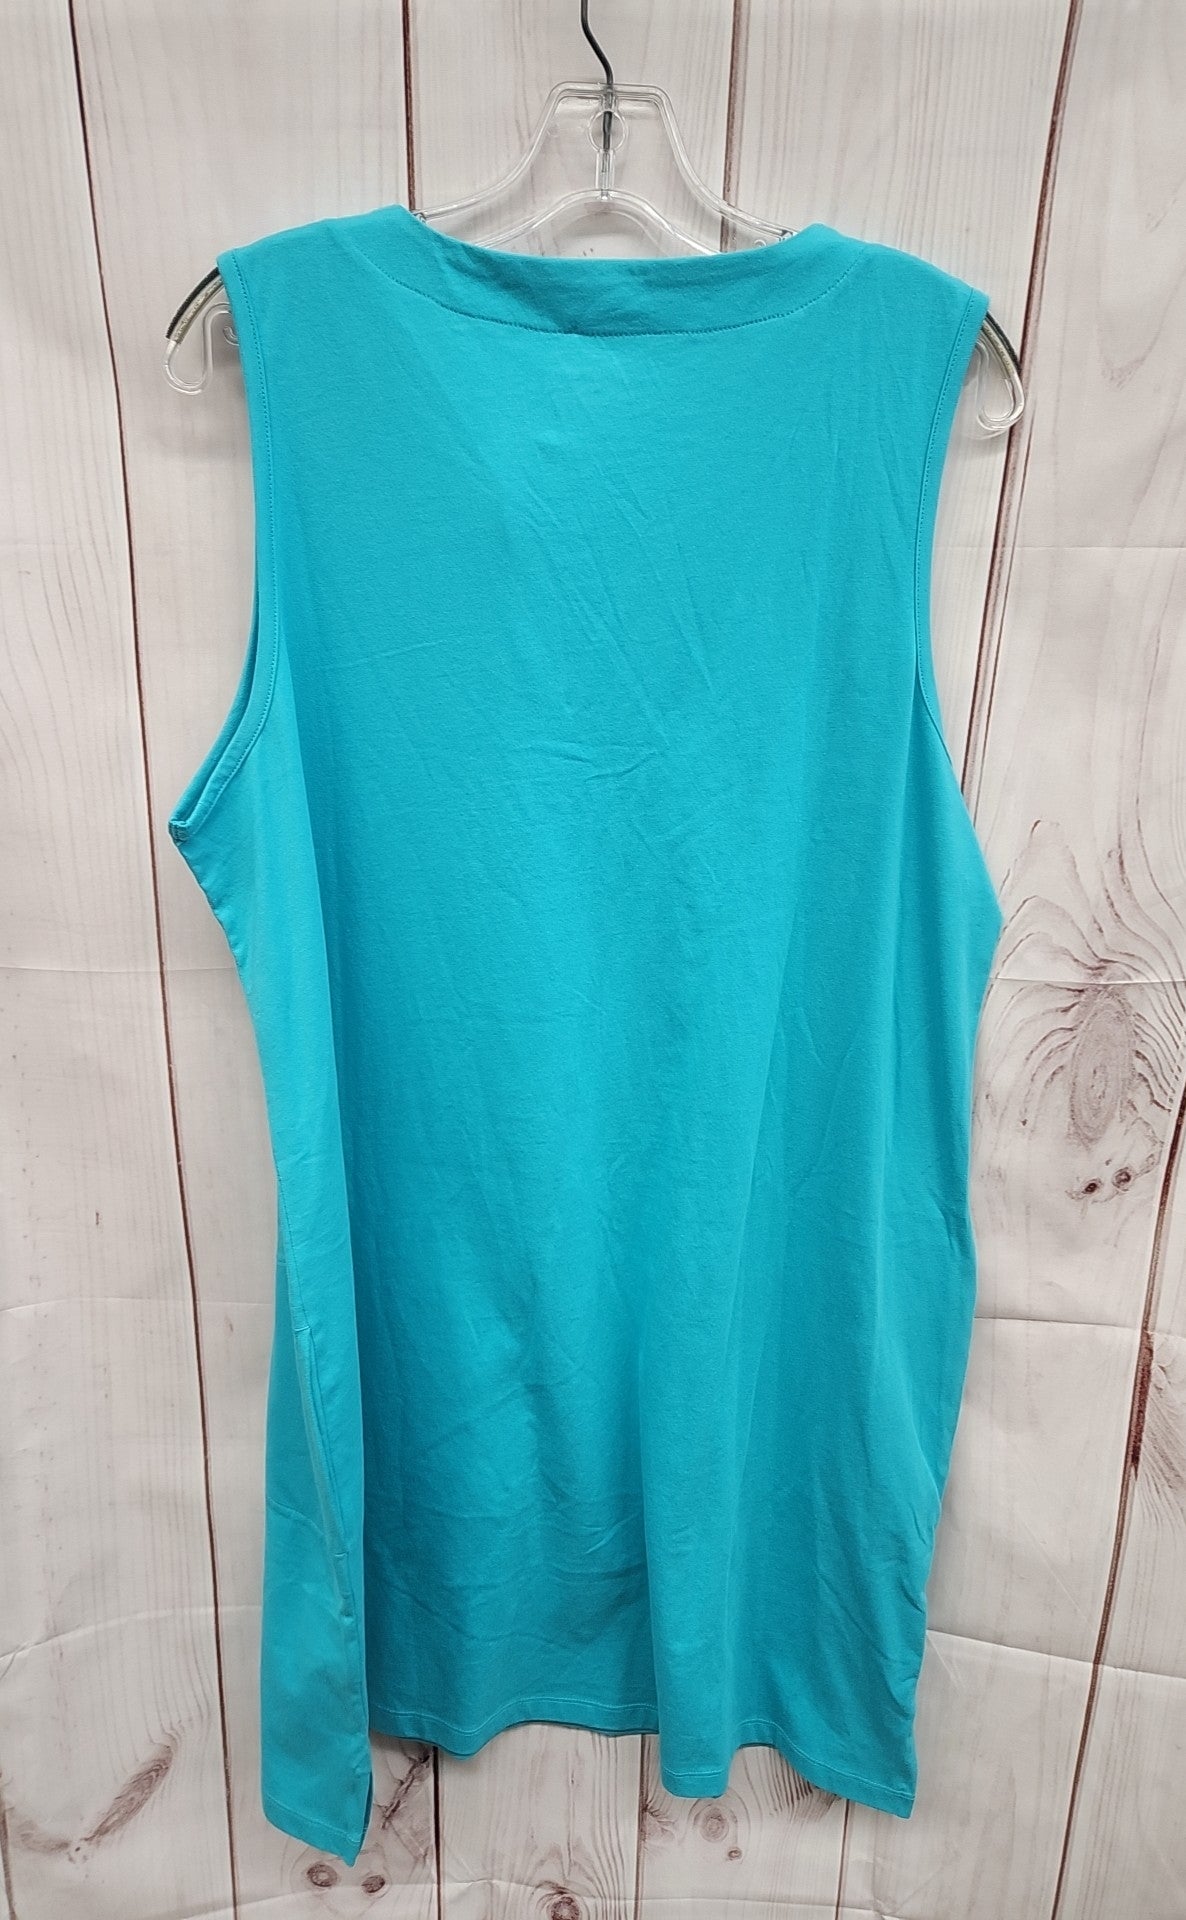 Lands End Women's Size XL Turquoise Dress